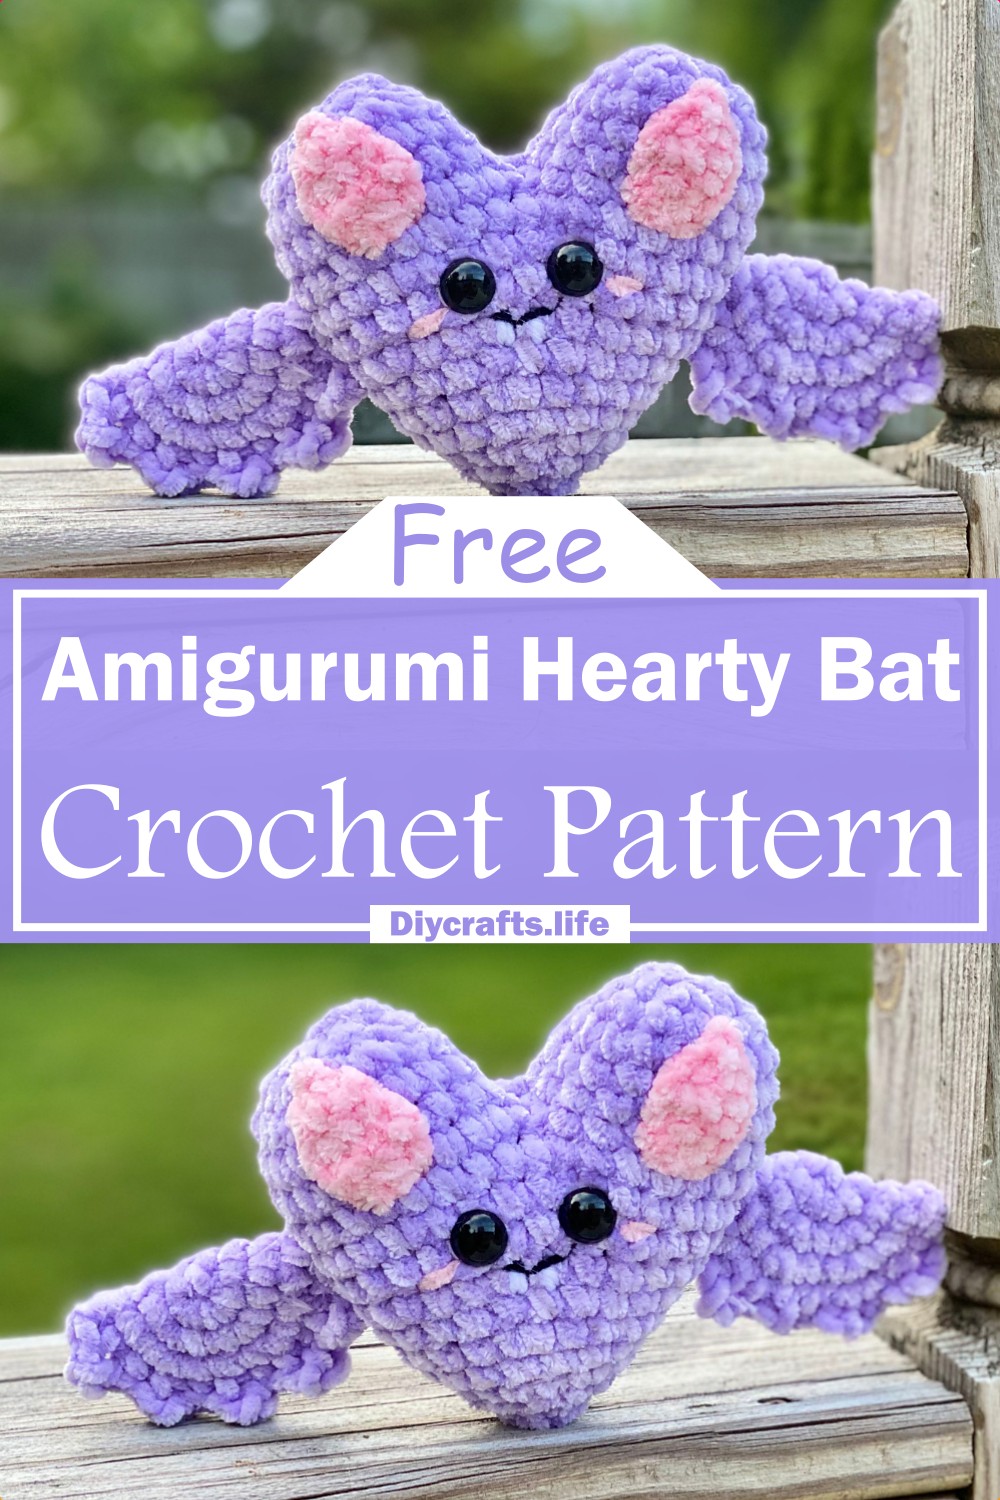 Amigurumi Hearty Bat